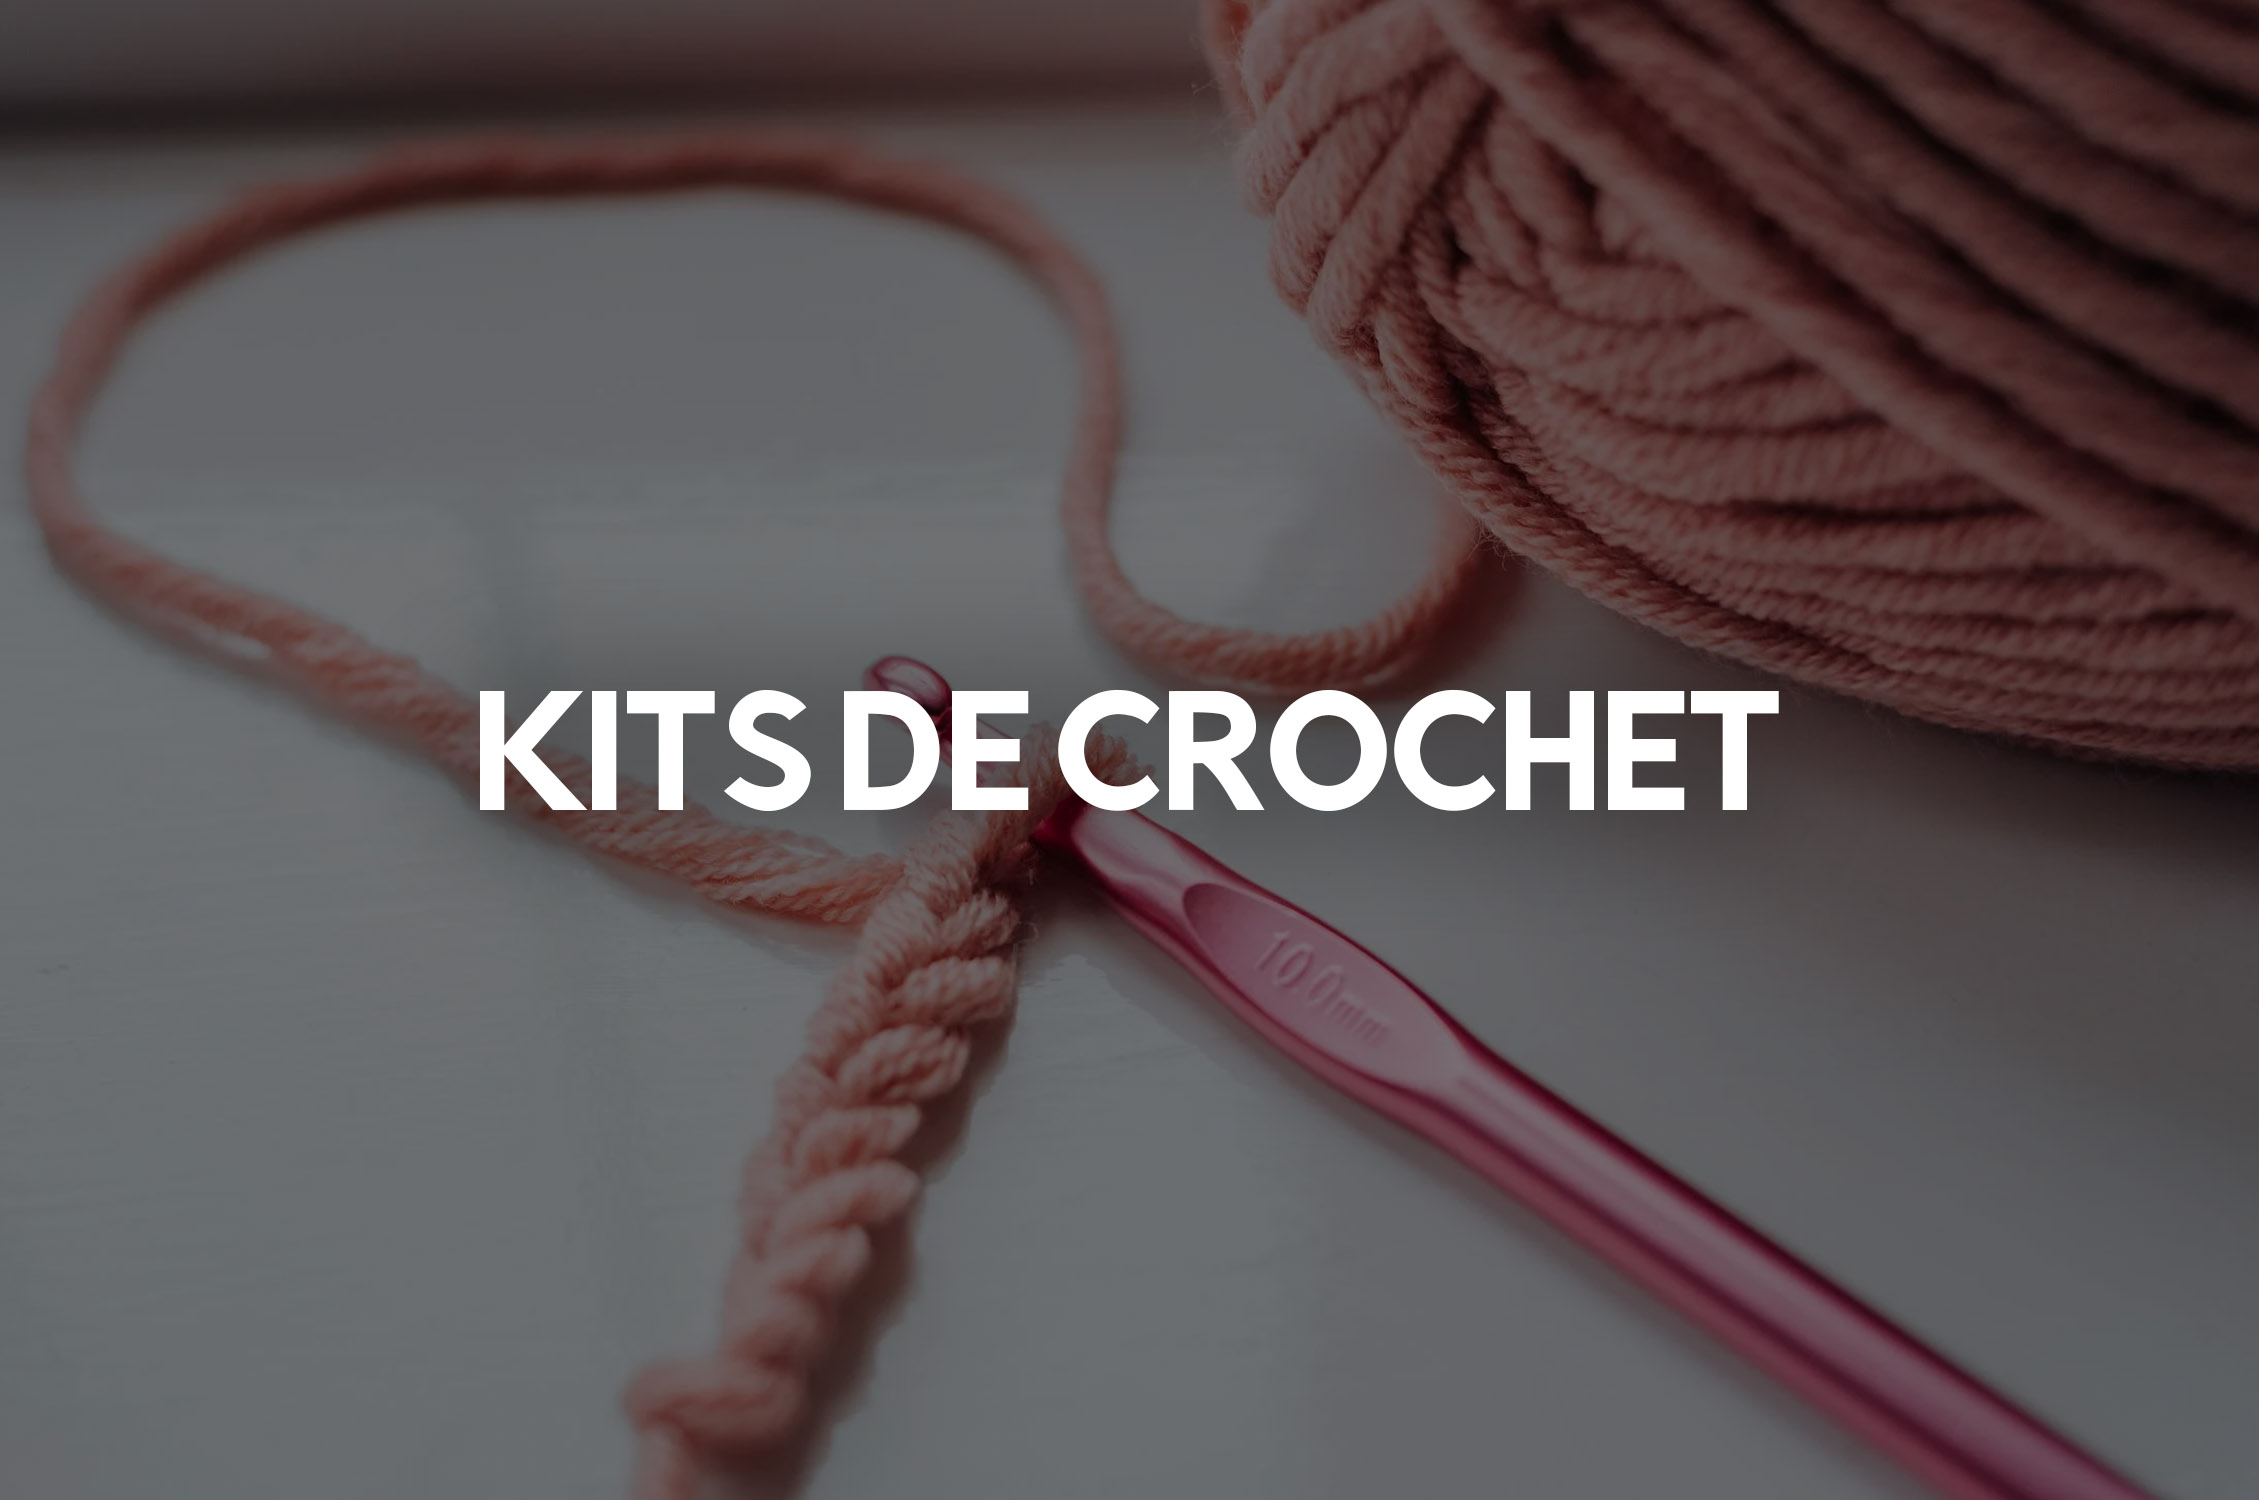 Kit Starter - Kit pour apprendre les bases du crochet - Niveau